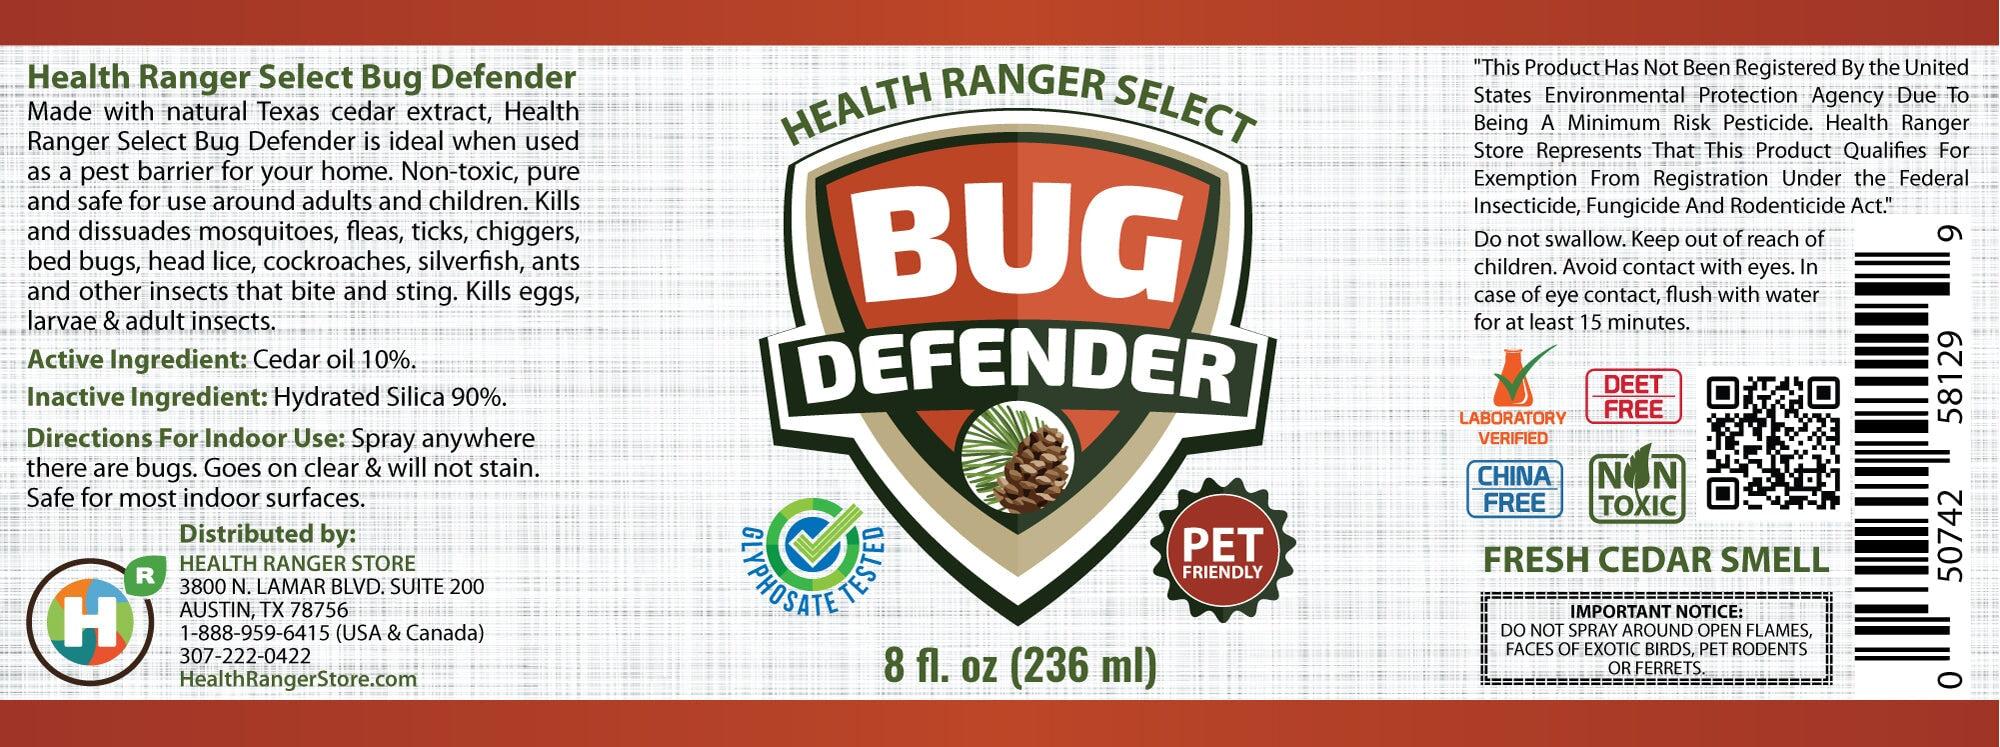 DEET-Free Bug Defender 8oz (236ml) Personal Care Brighteon Store 